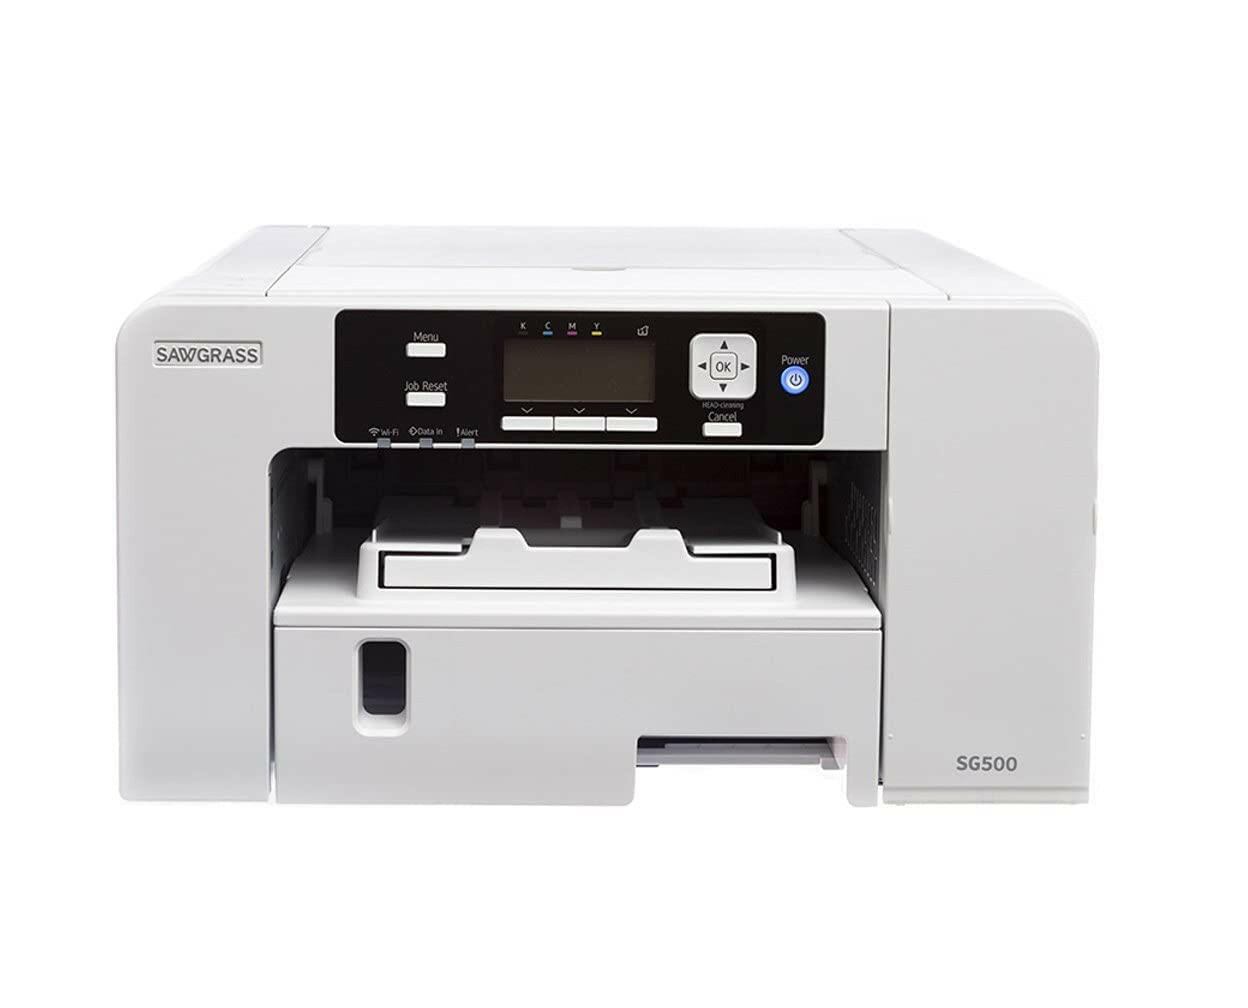 Sawgrass SG 500 Sublimation Printer.